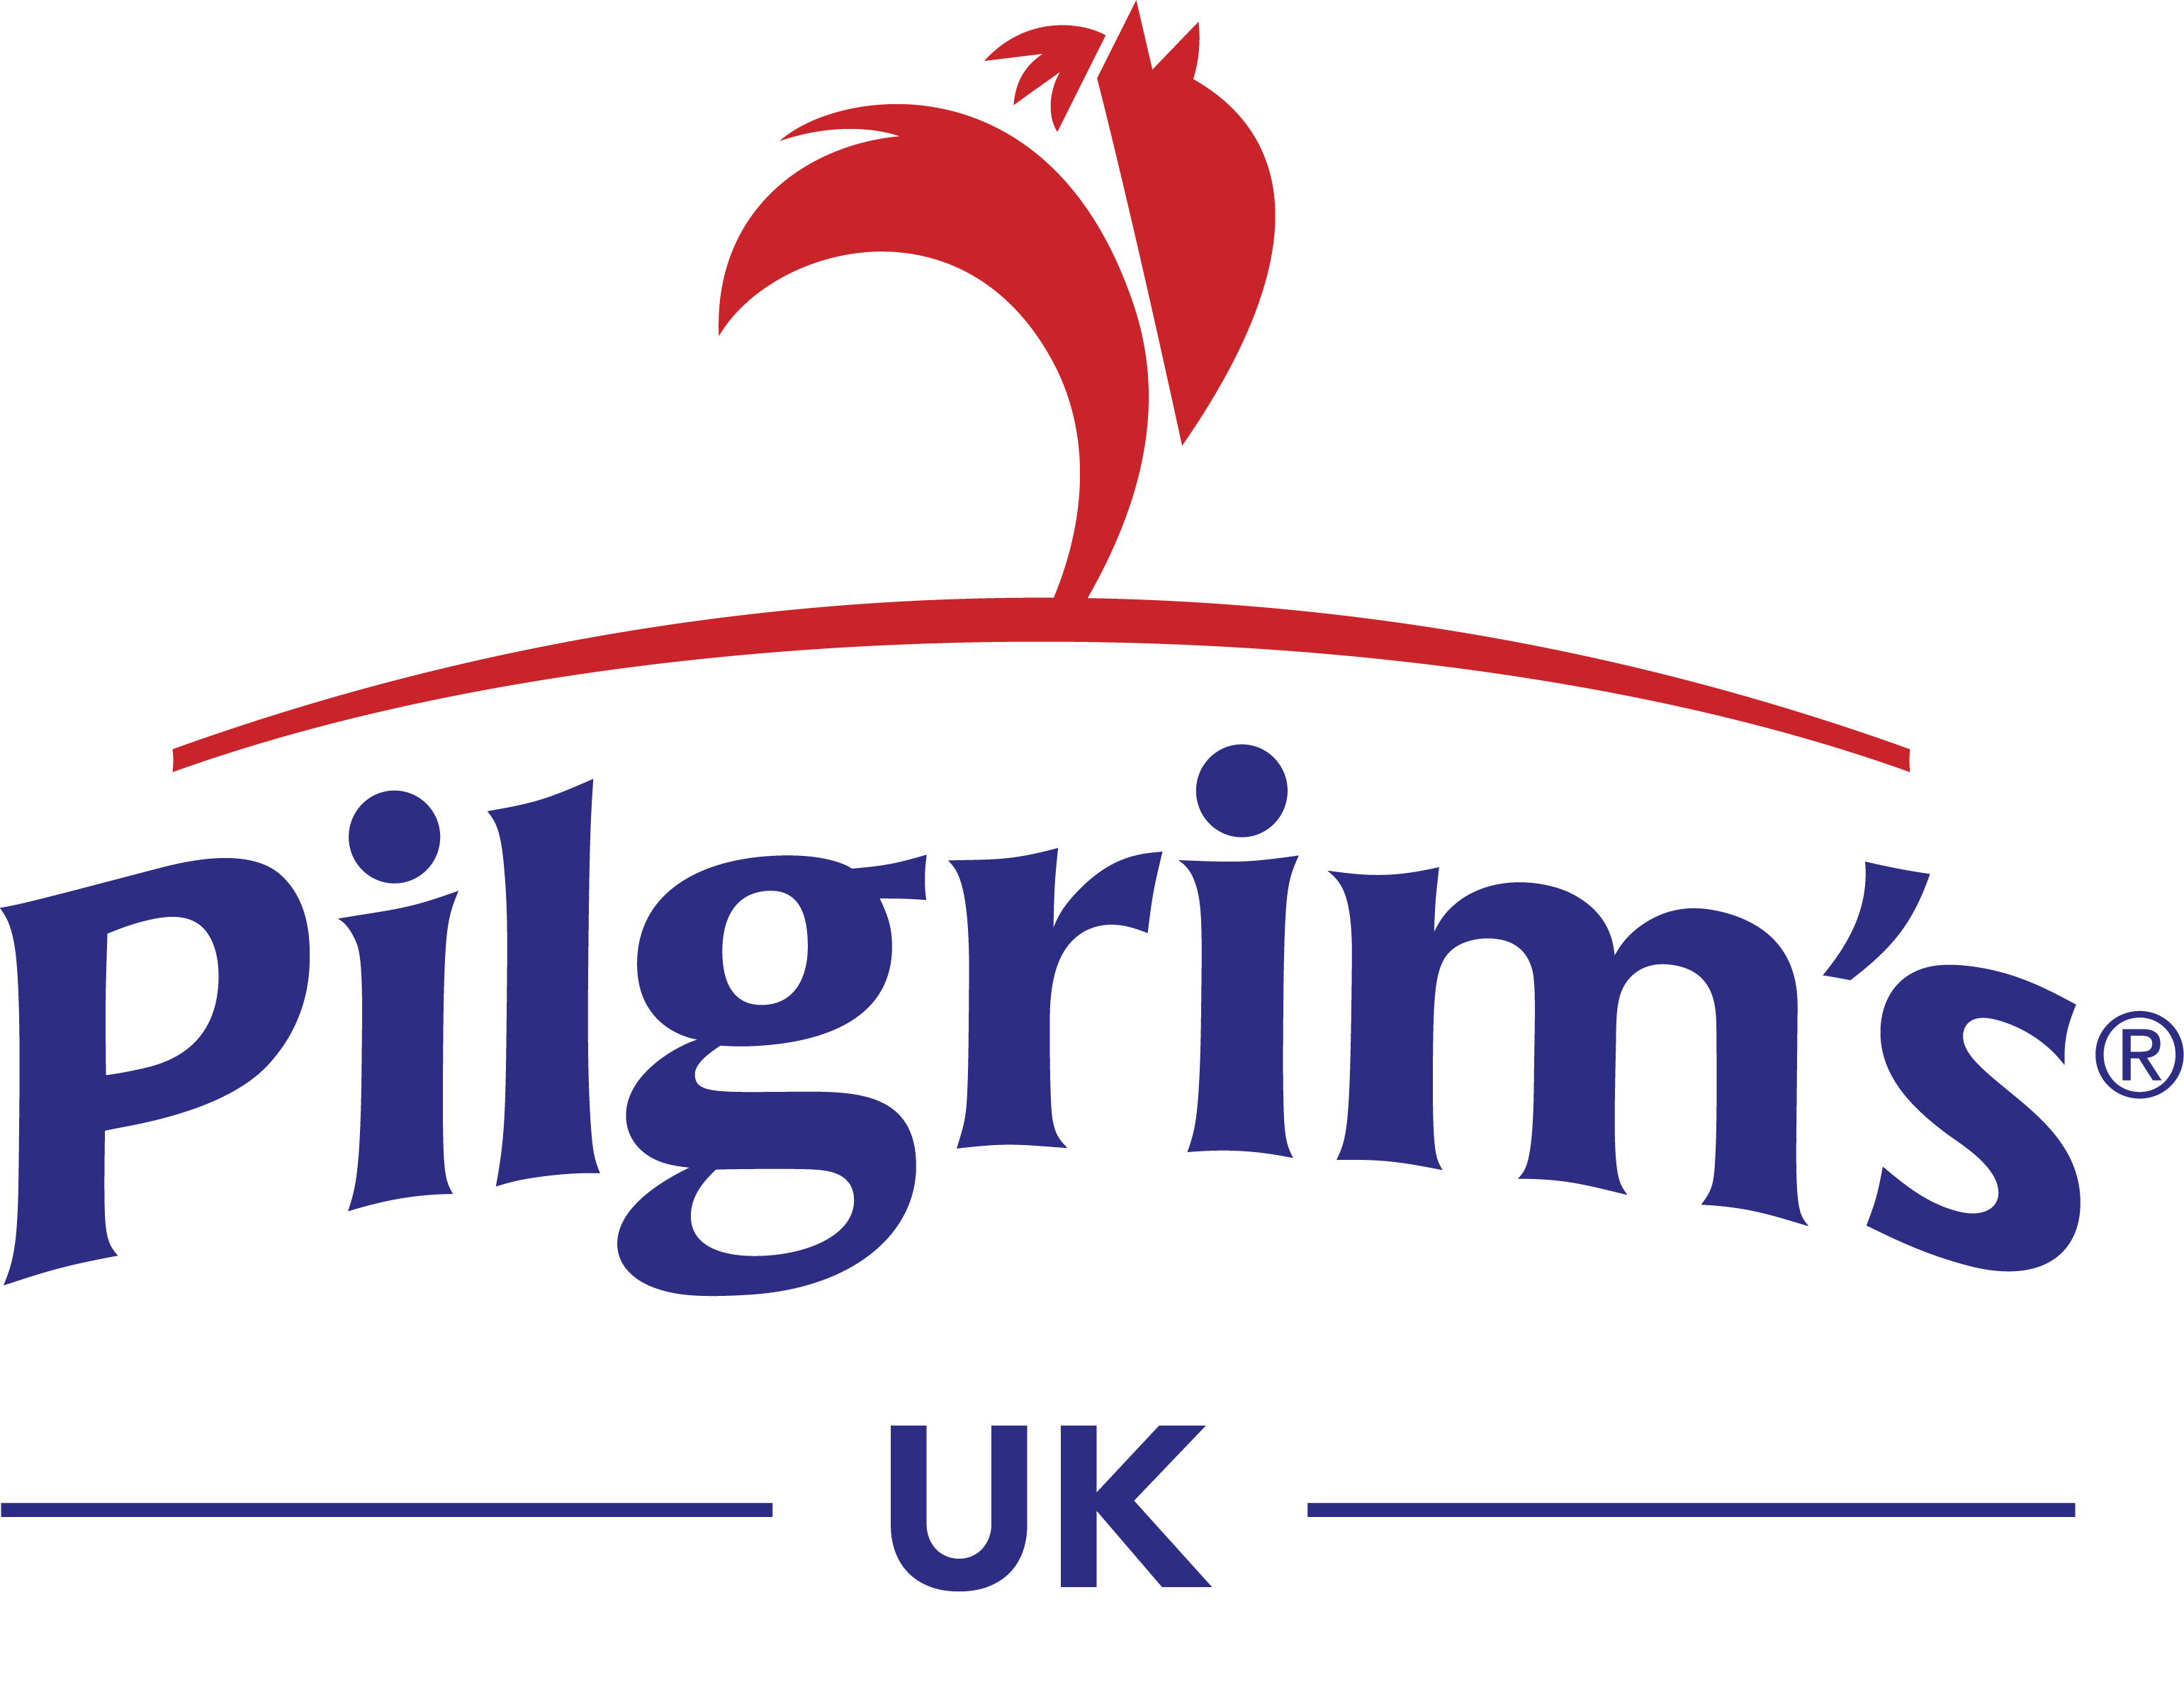 Pilgrim's UK